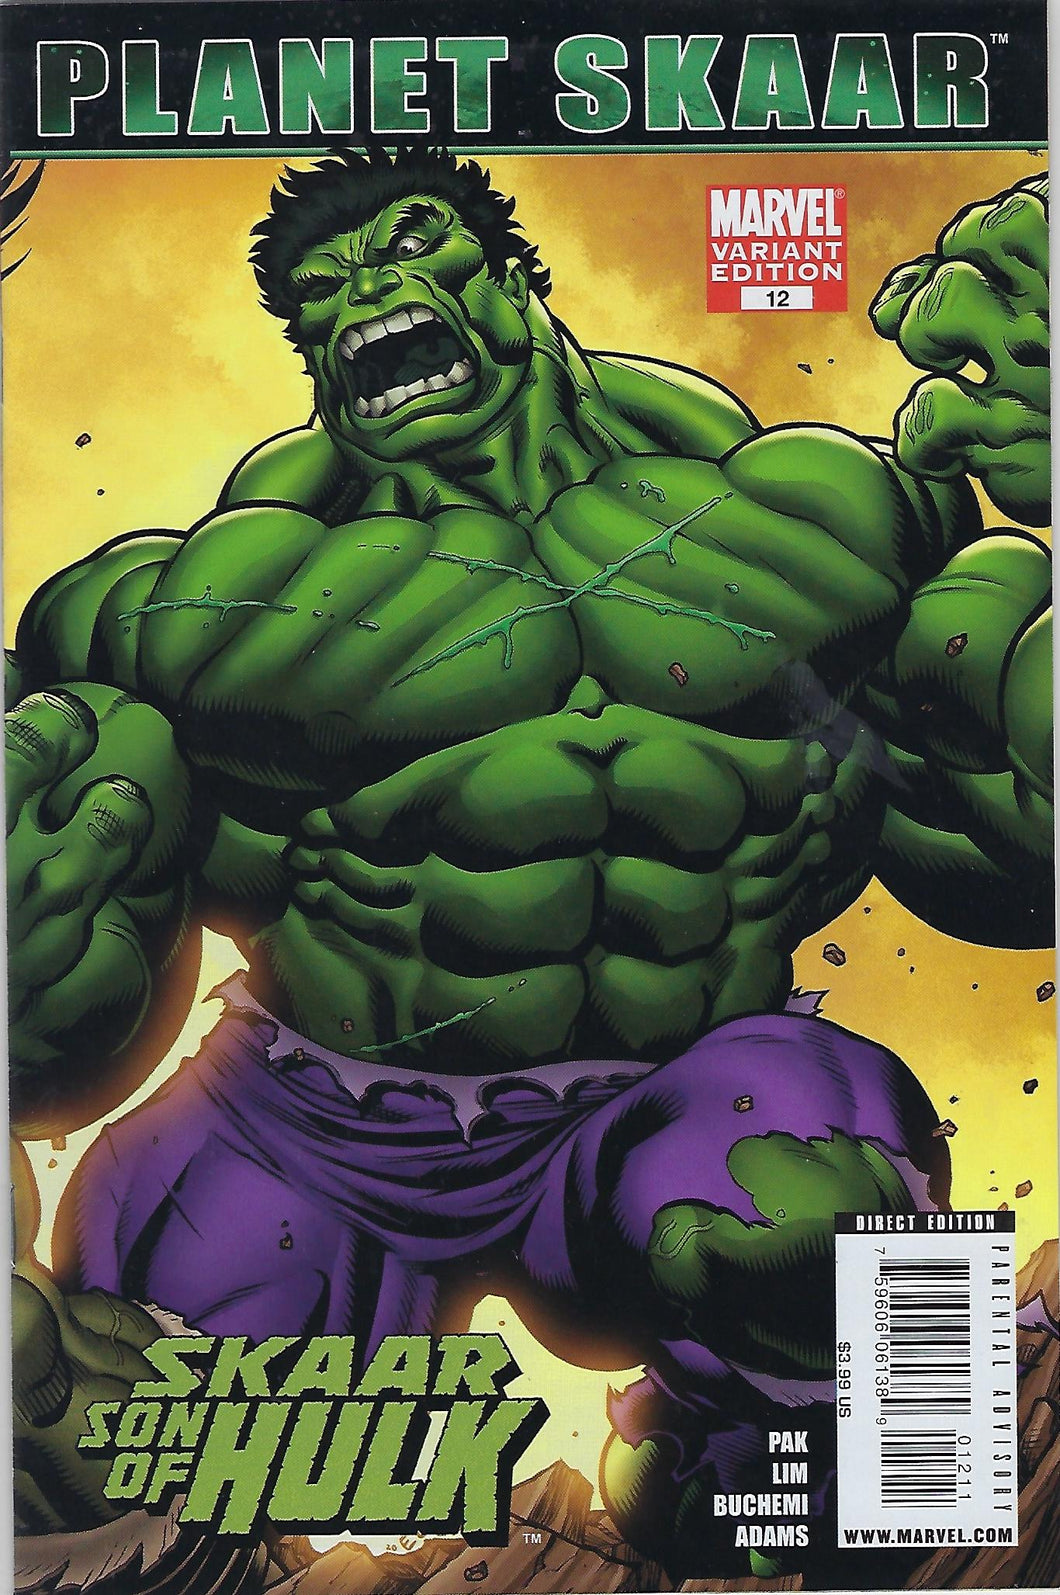 Skaar Son of Hulk !!  Planet Skaar # 12 Variant Cover Edition !!!   VF/NM